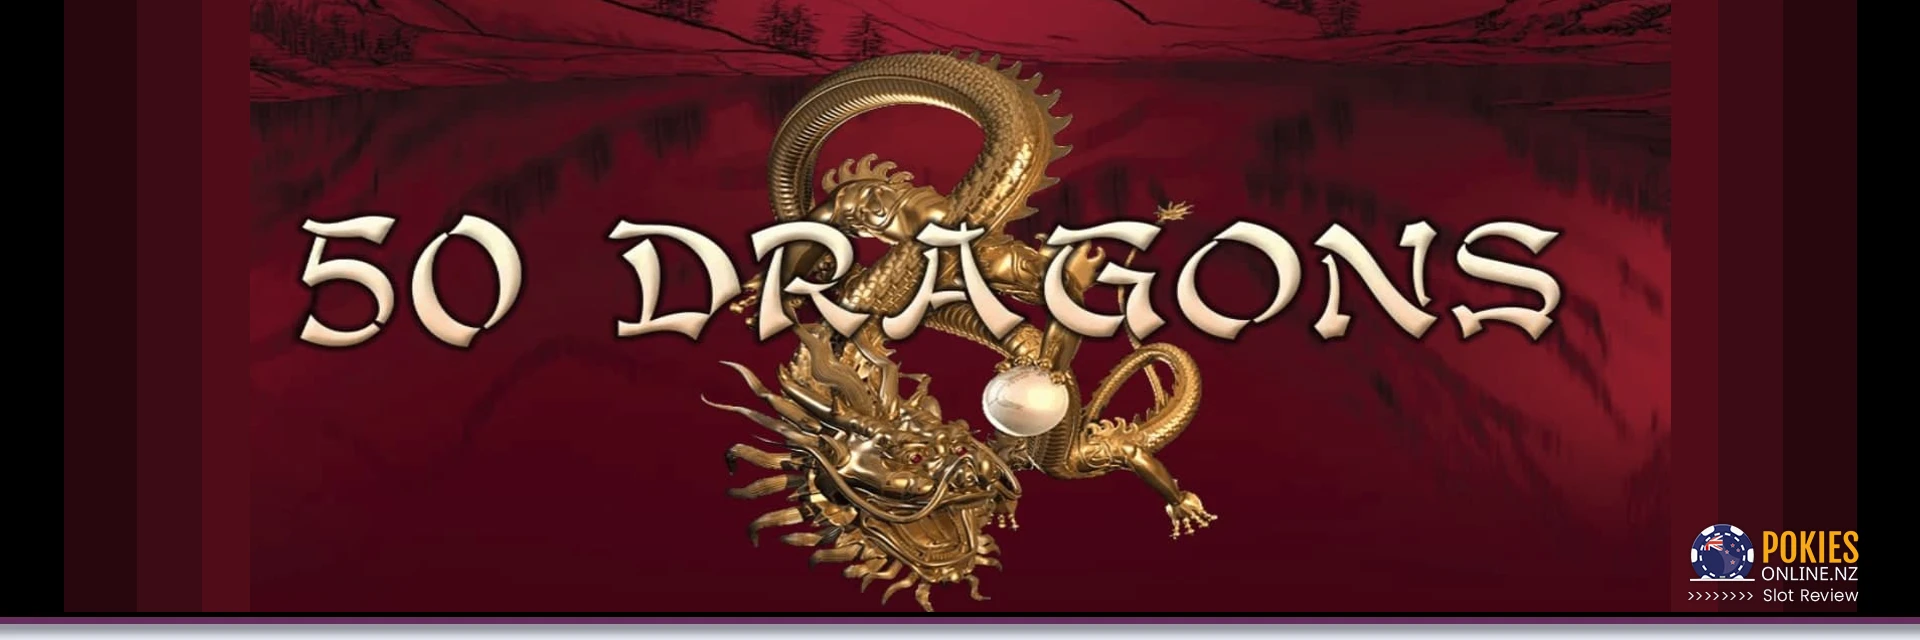 50 dragons Banner